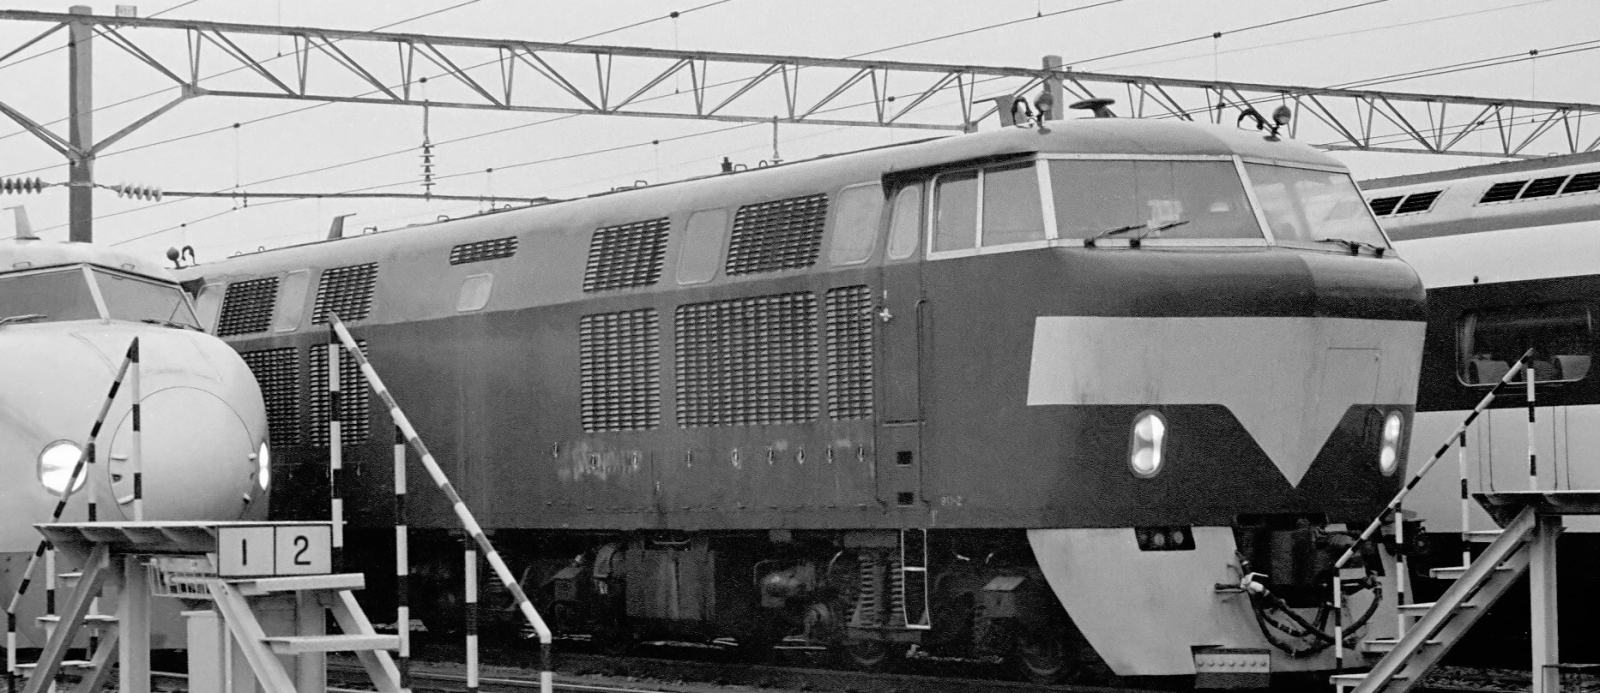 911 2 in September 1985 at the depot next to a Series 0 Shinkansen